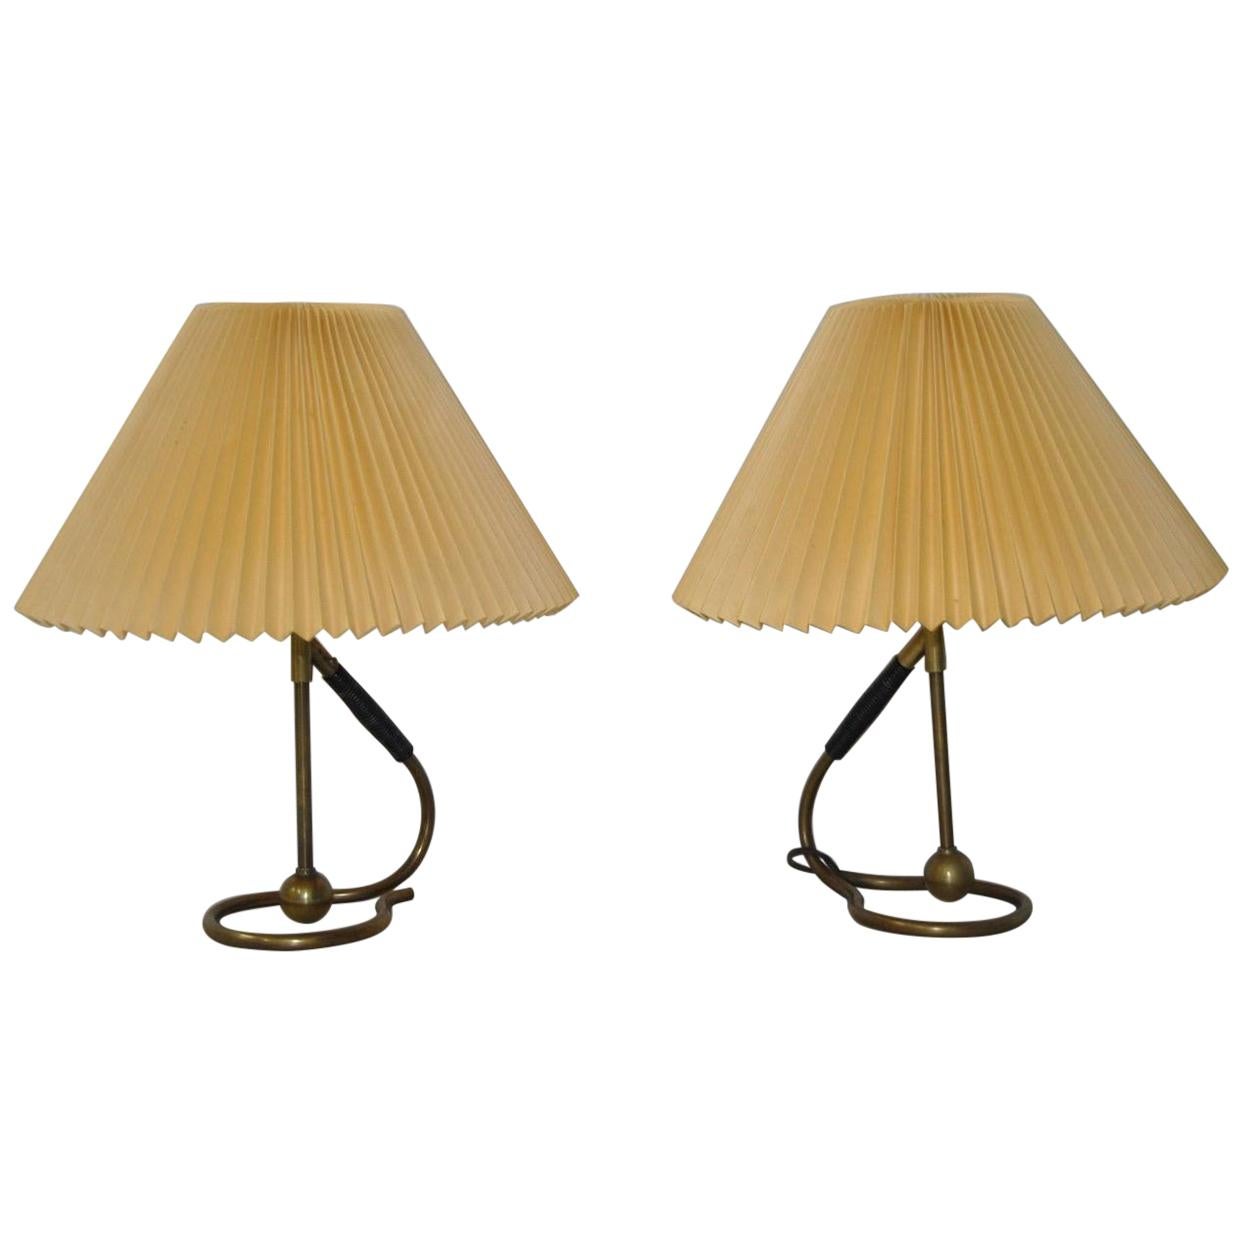 Pair of Kaare Klint Designer Table Lamps for Le Klint of Denmark circa 1940s